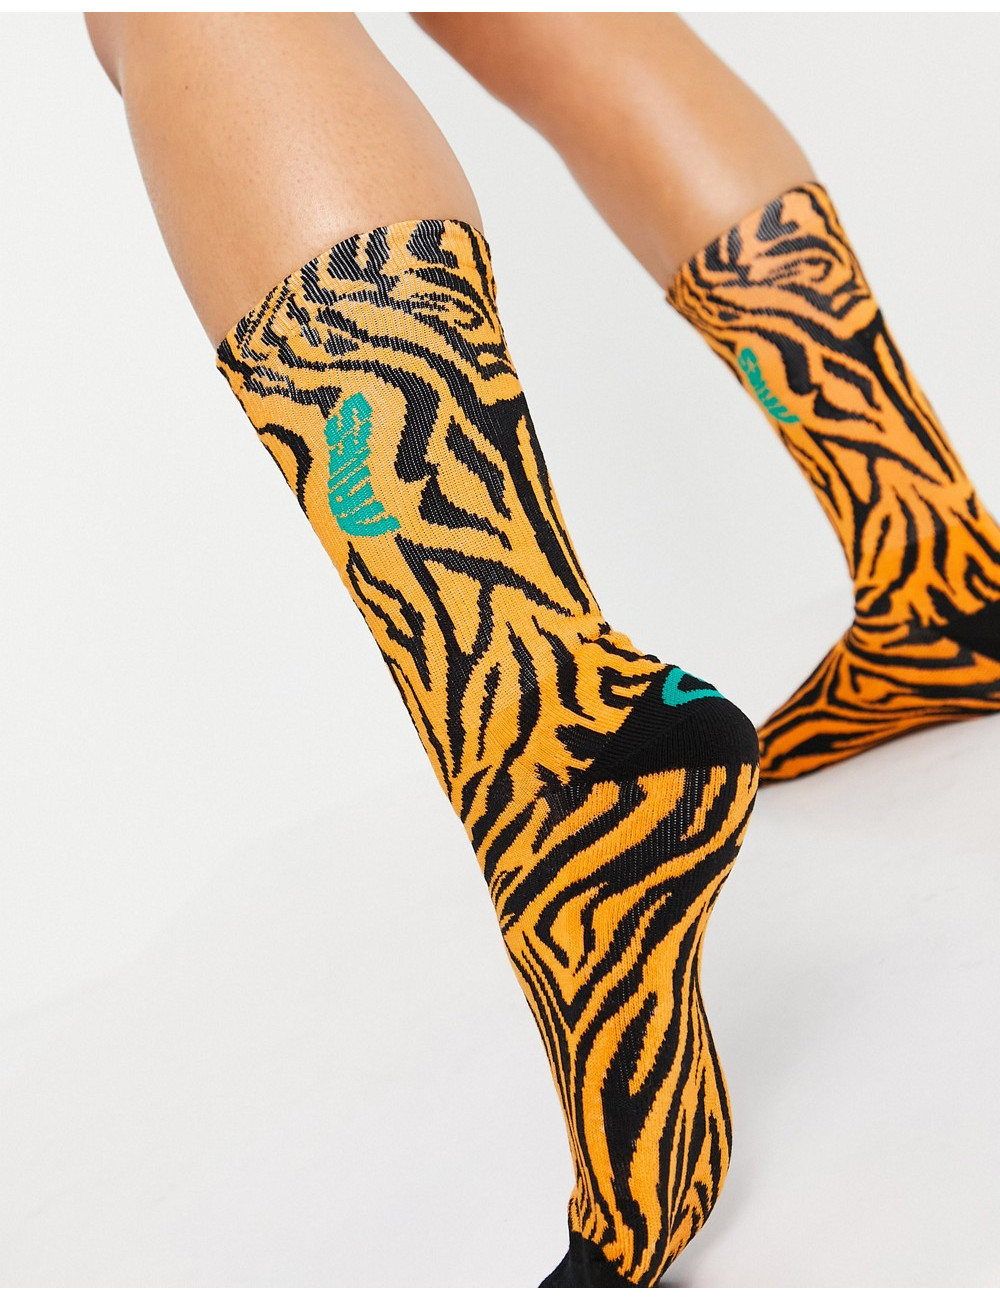 Aries socks in tiger print